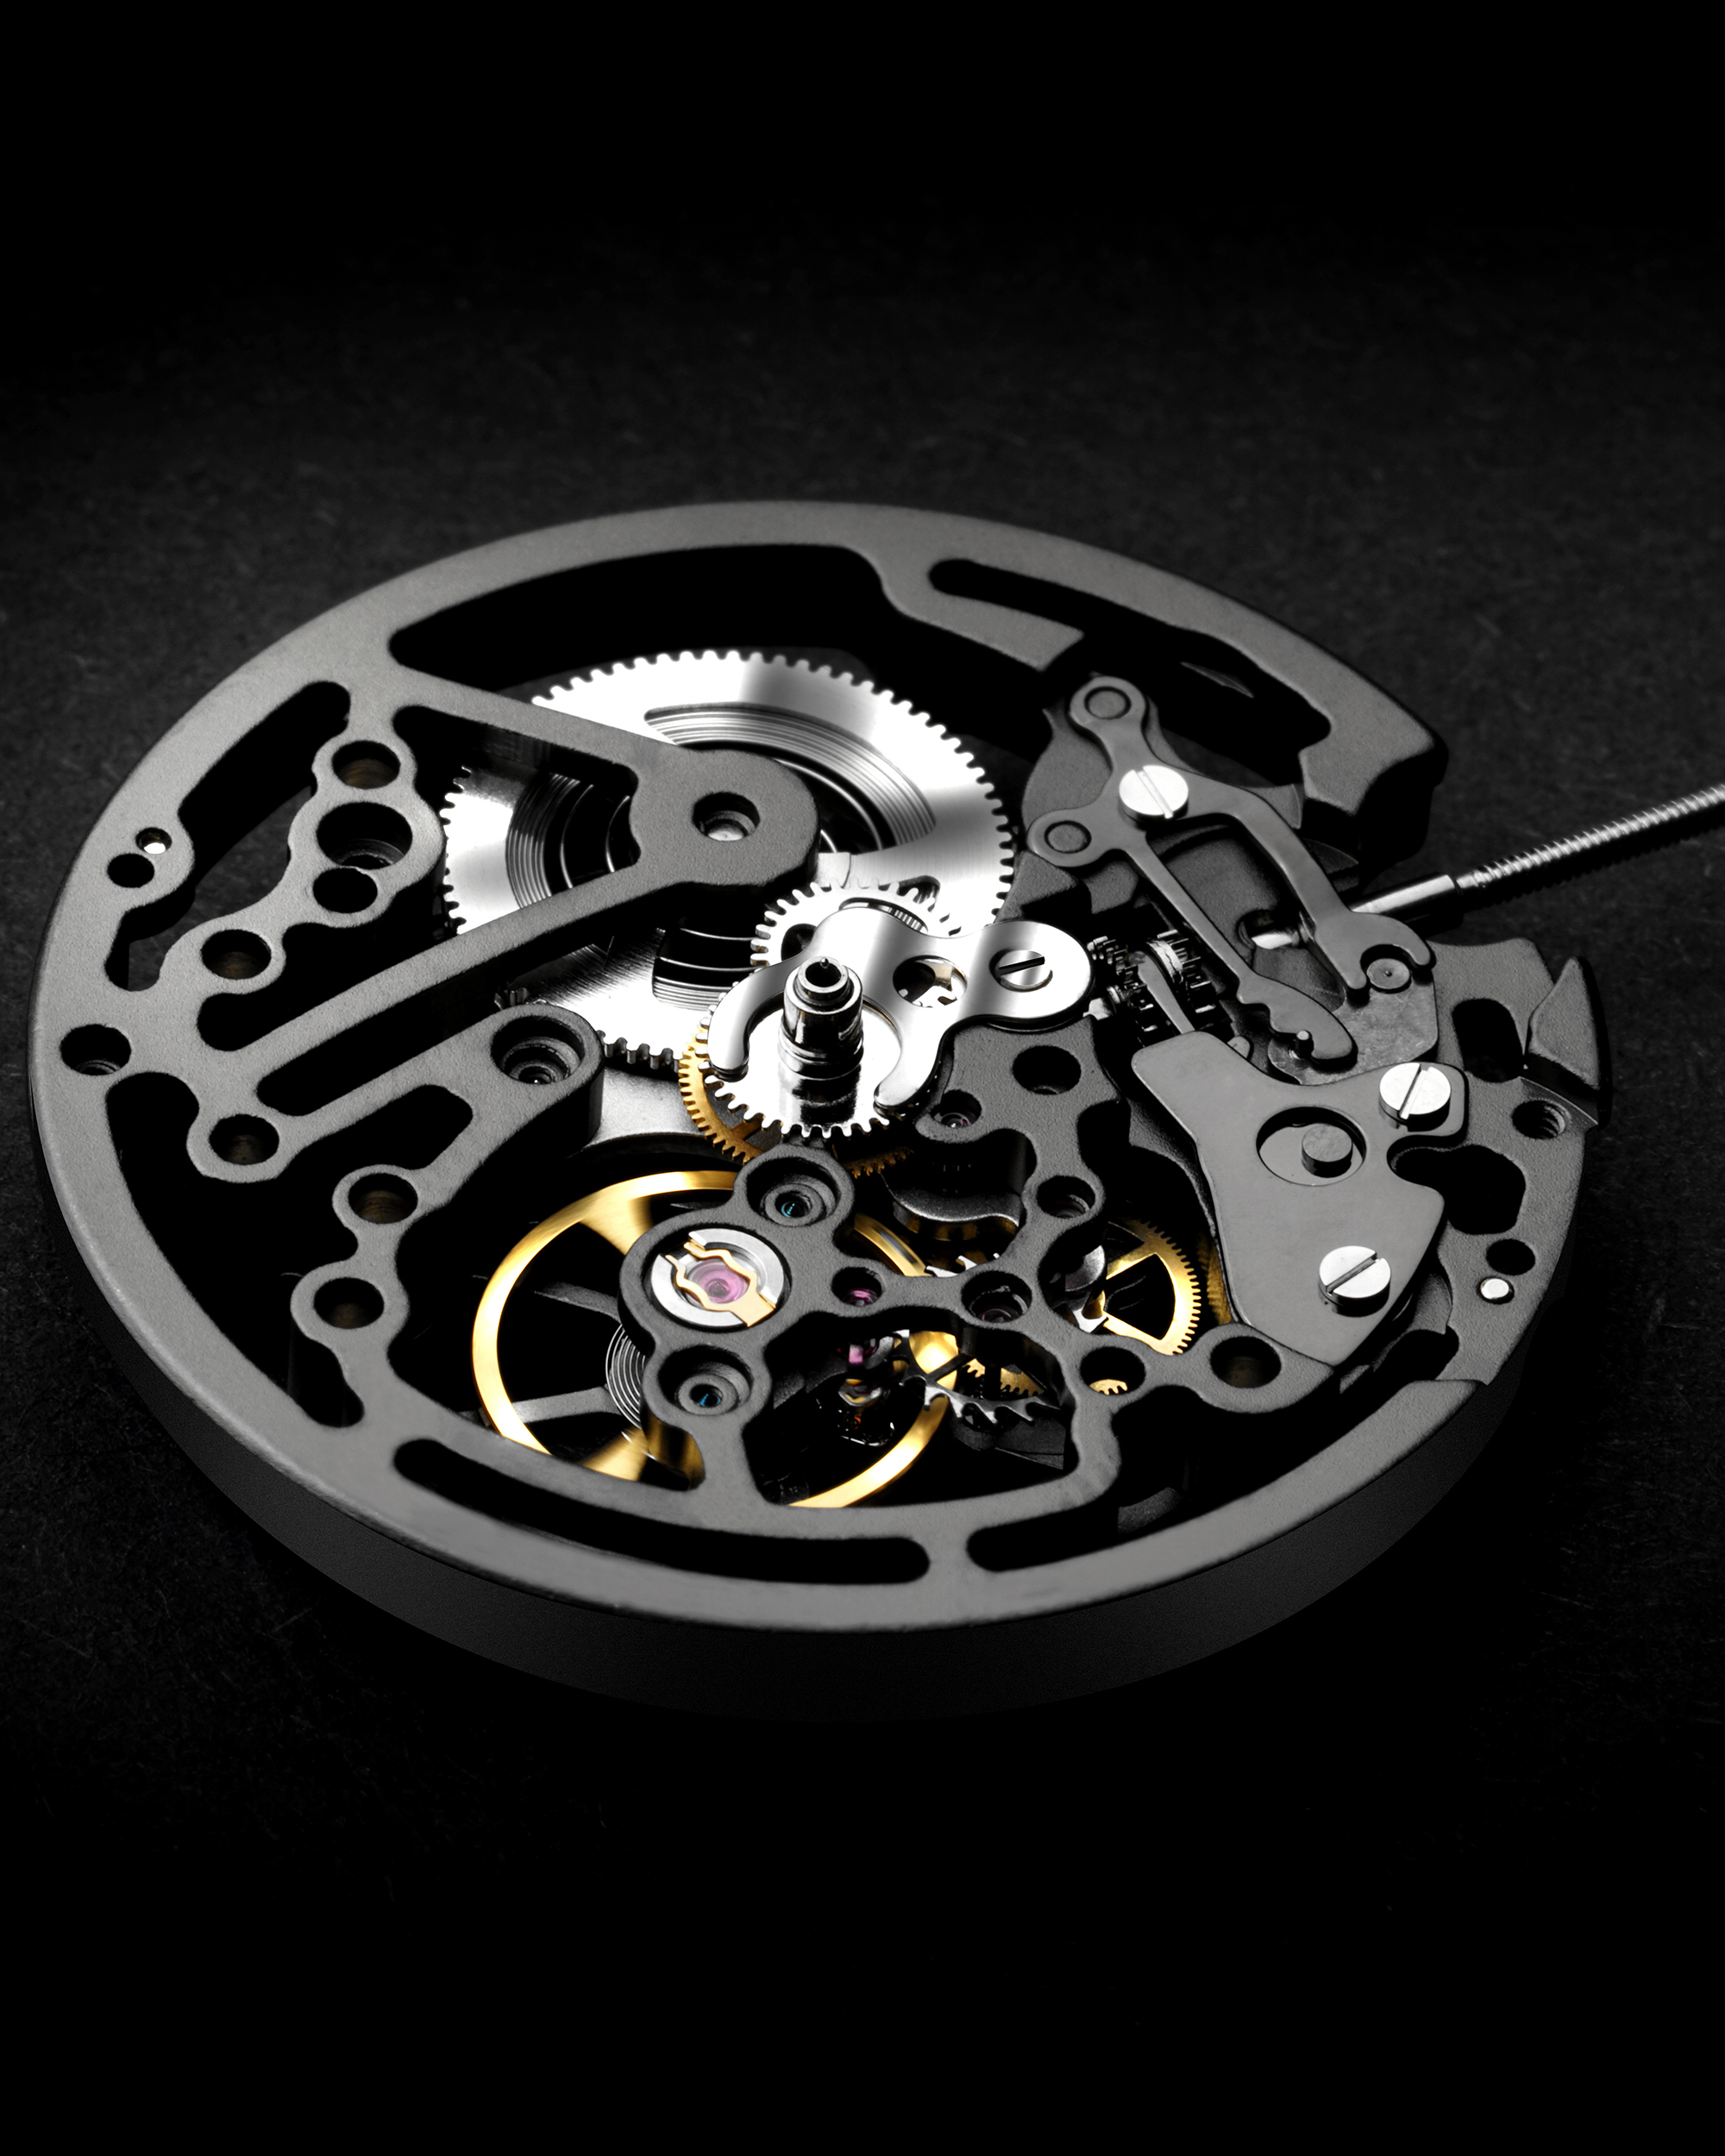 часы CIGA Design FULL HOLLOW AUTOMATIC Black фото 8